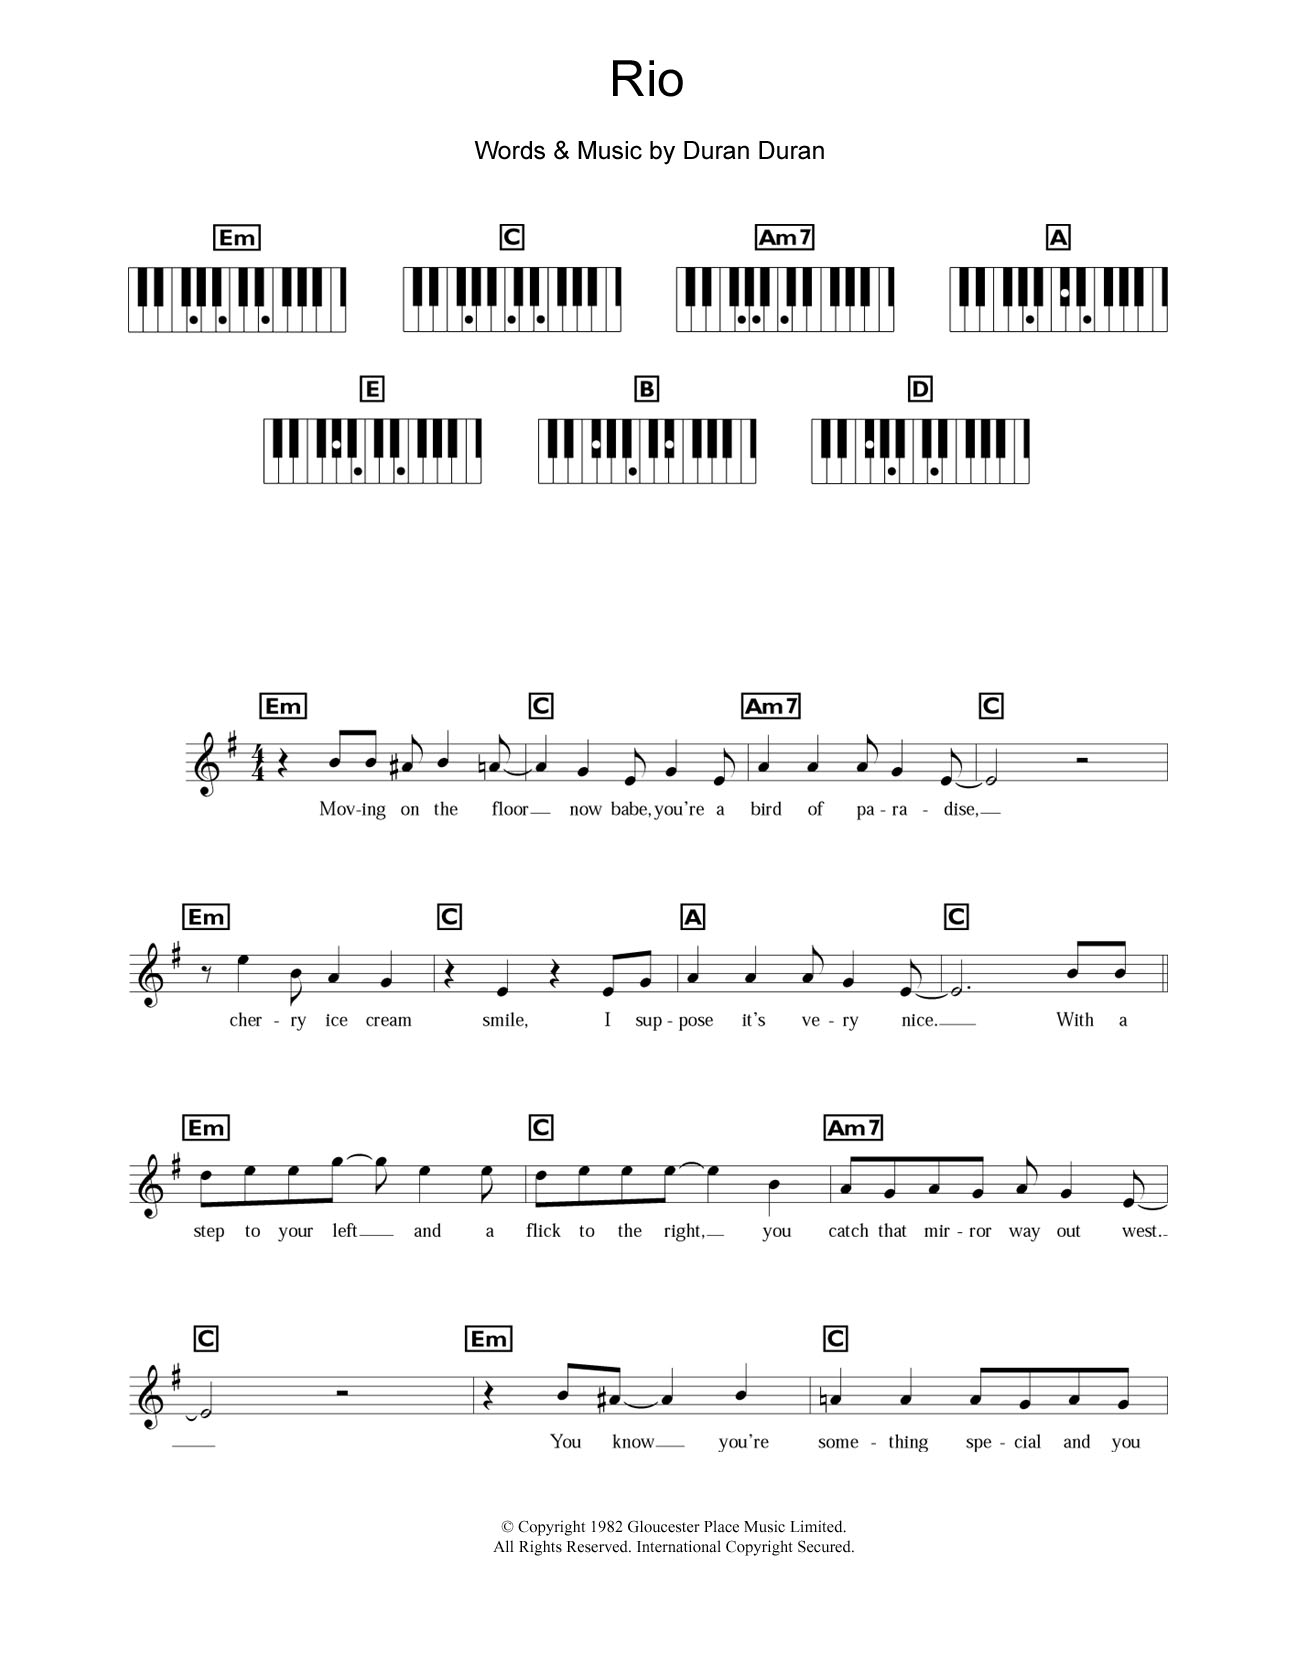 Duran Duran Rio Sheet Music Notes & Chords for Lead Sheet / Fake Book - Download or Print PDF